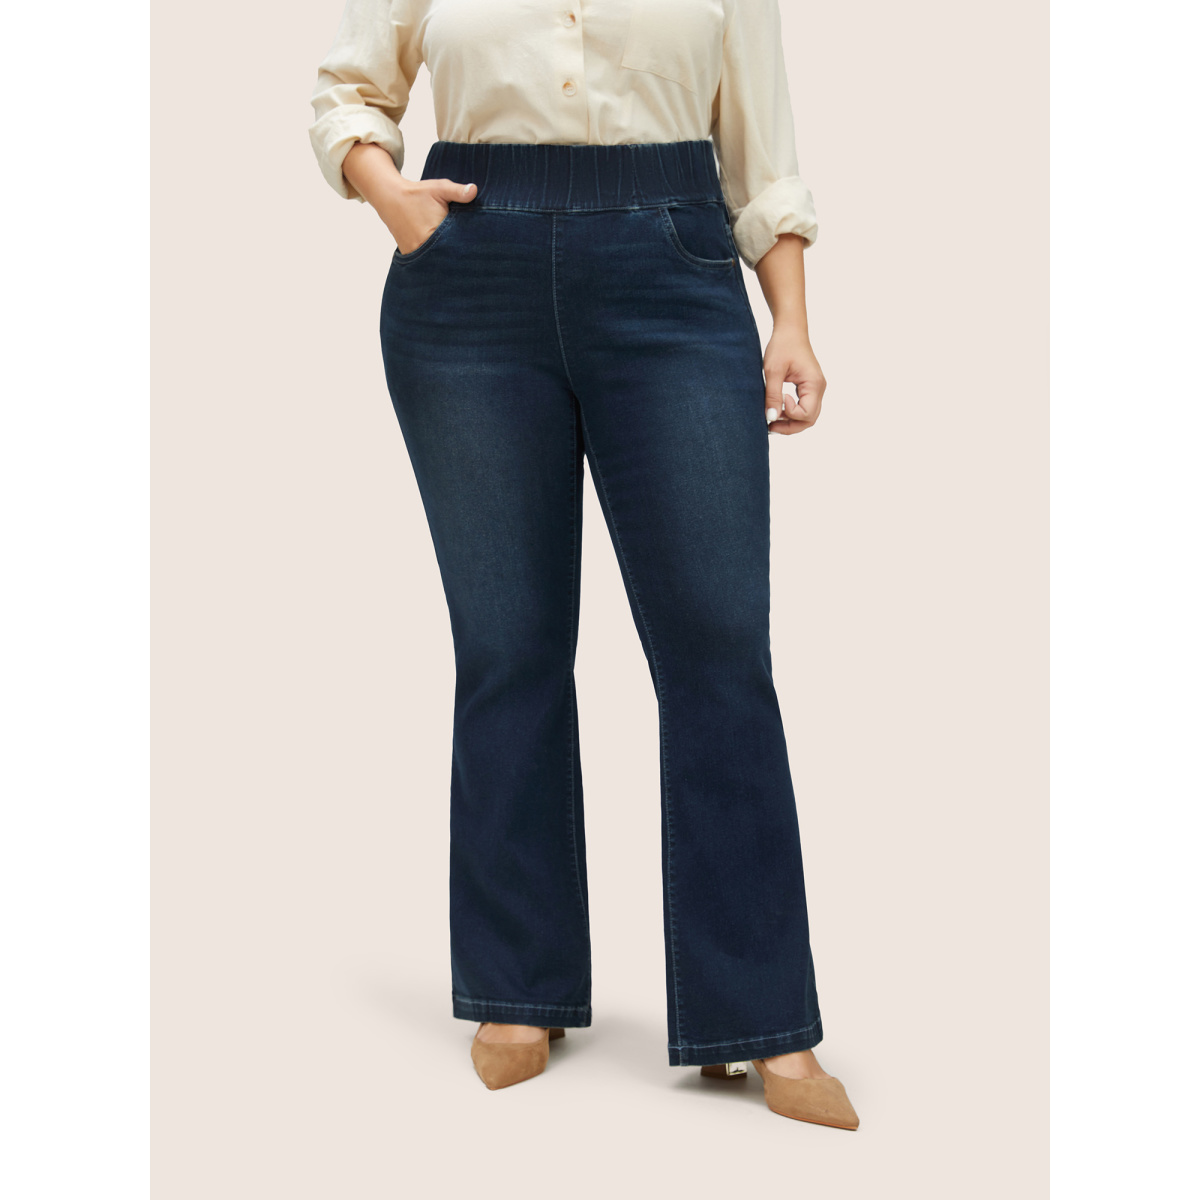 

Plus Size Elastic Waist Flare Leg Dark Wash Jeans Women Indigo Casual Plain Non High stretch Slanted pocket Jeans BloomChic